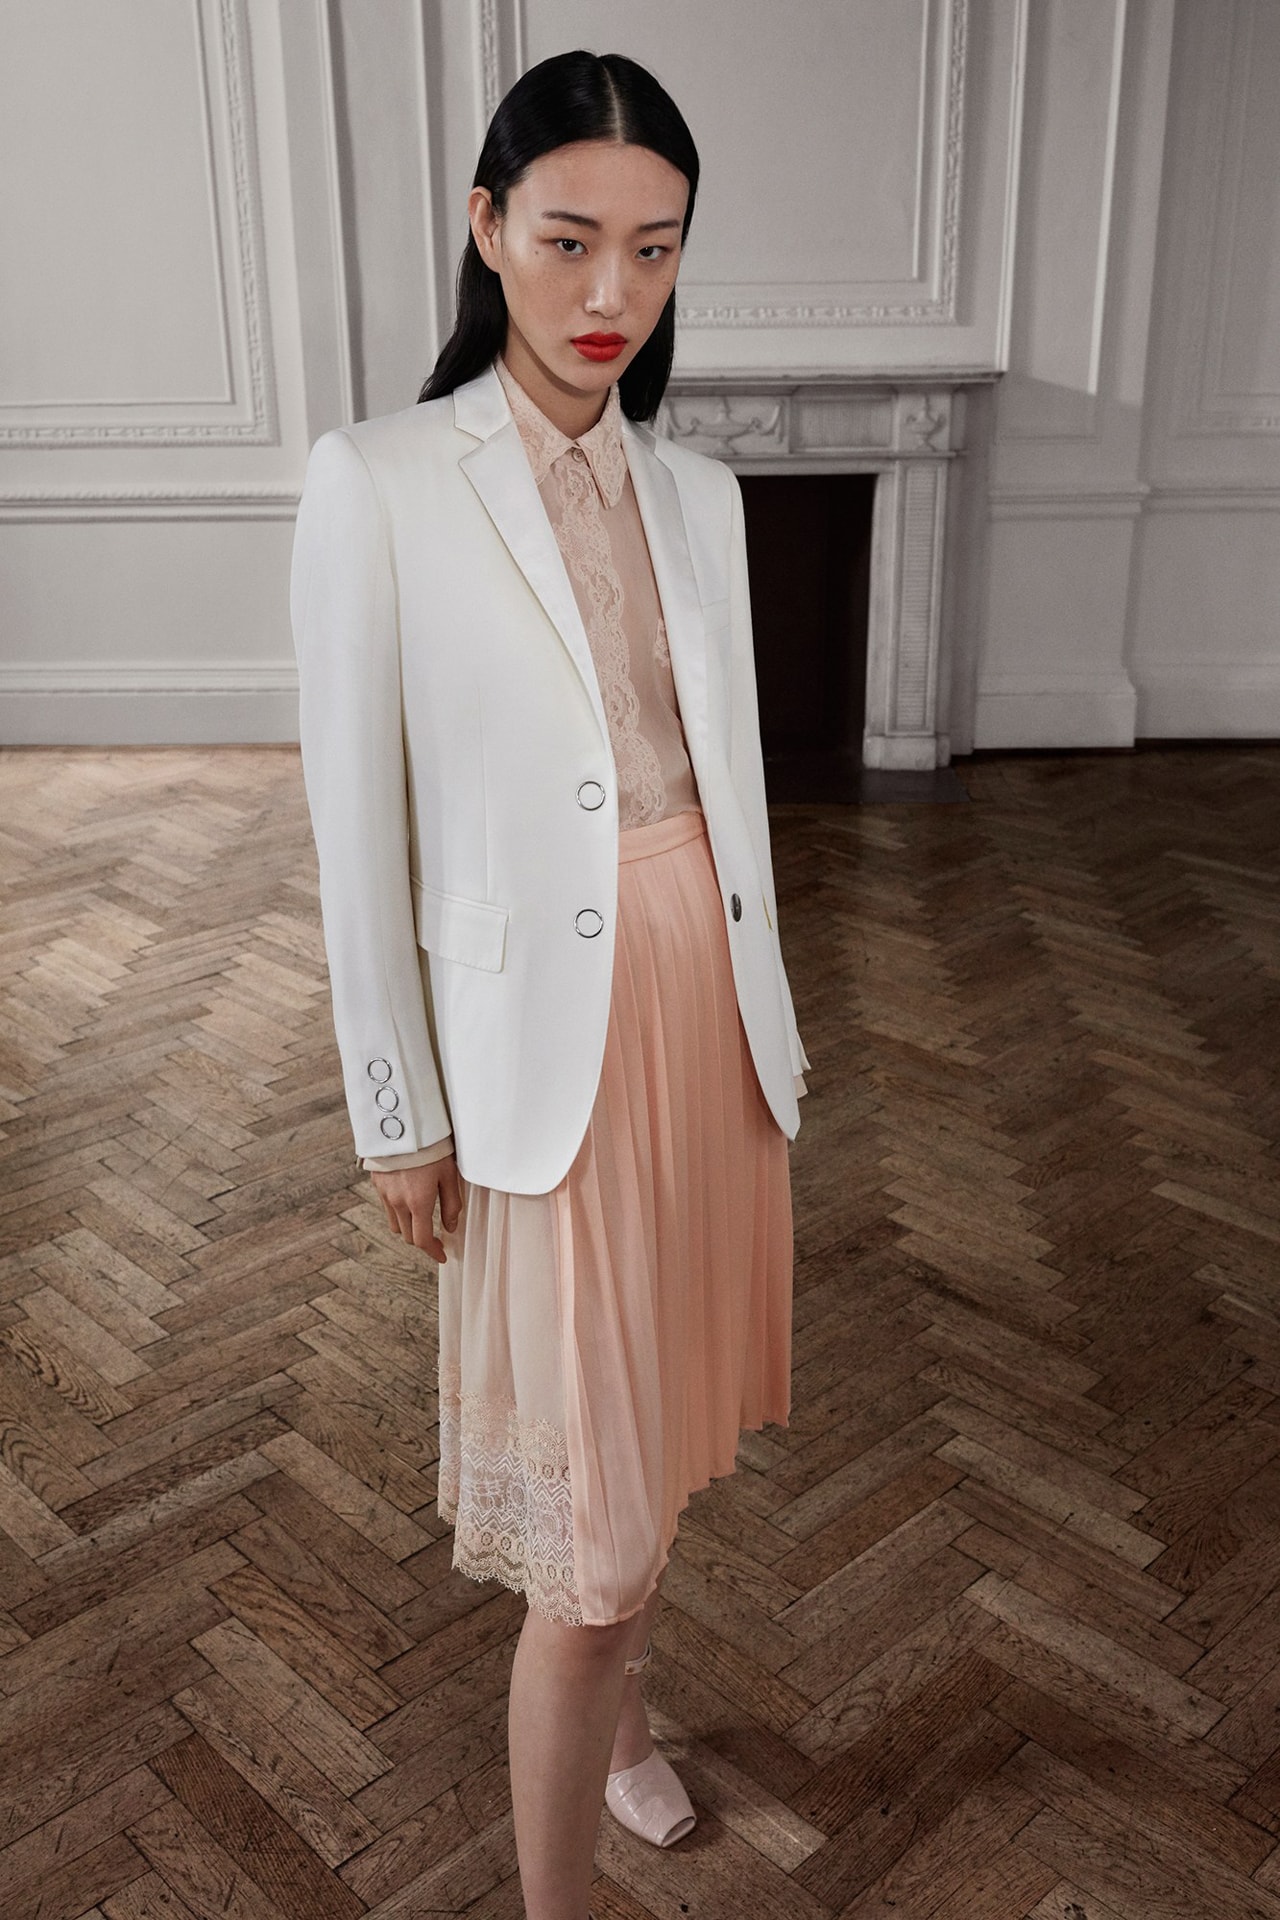 Burberry Riccardo Tisci Pre-Fall 2019 Collection Blazer White Dress Pink Shoes Tan